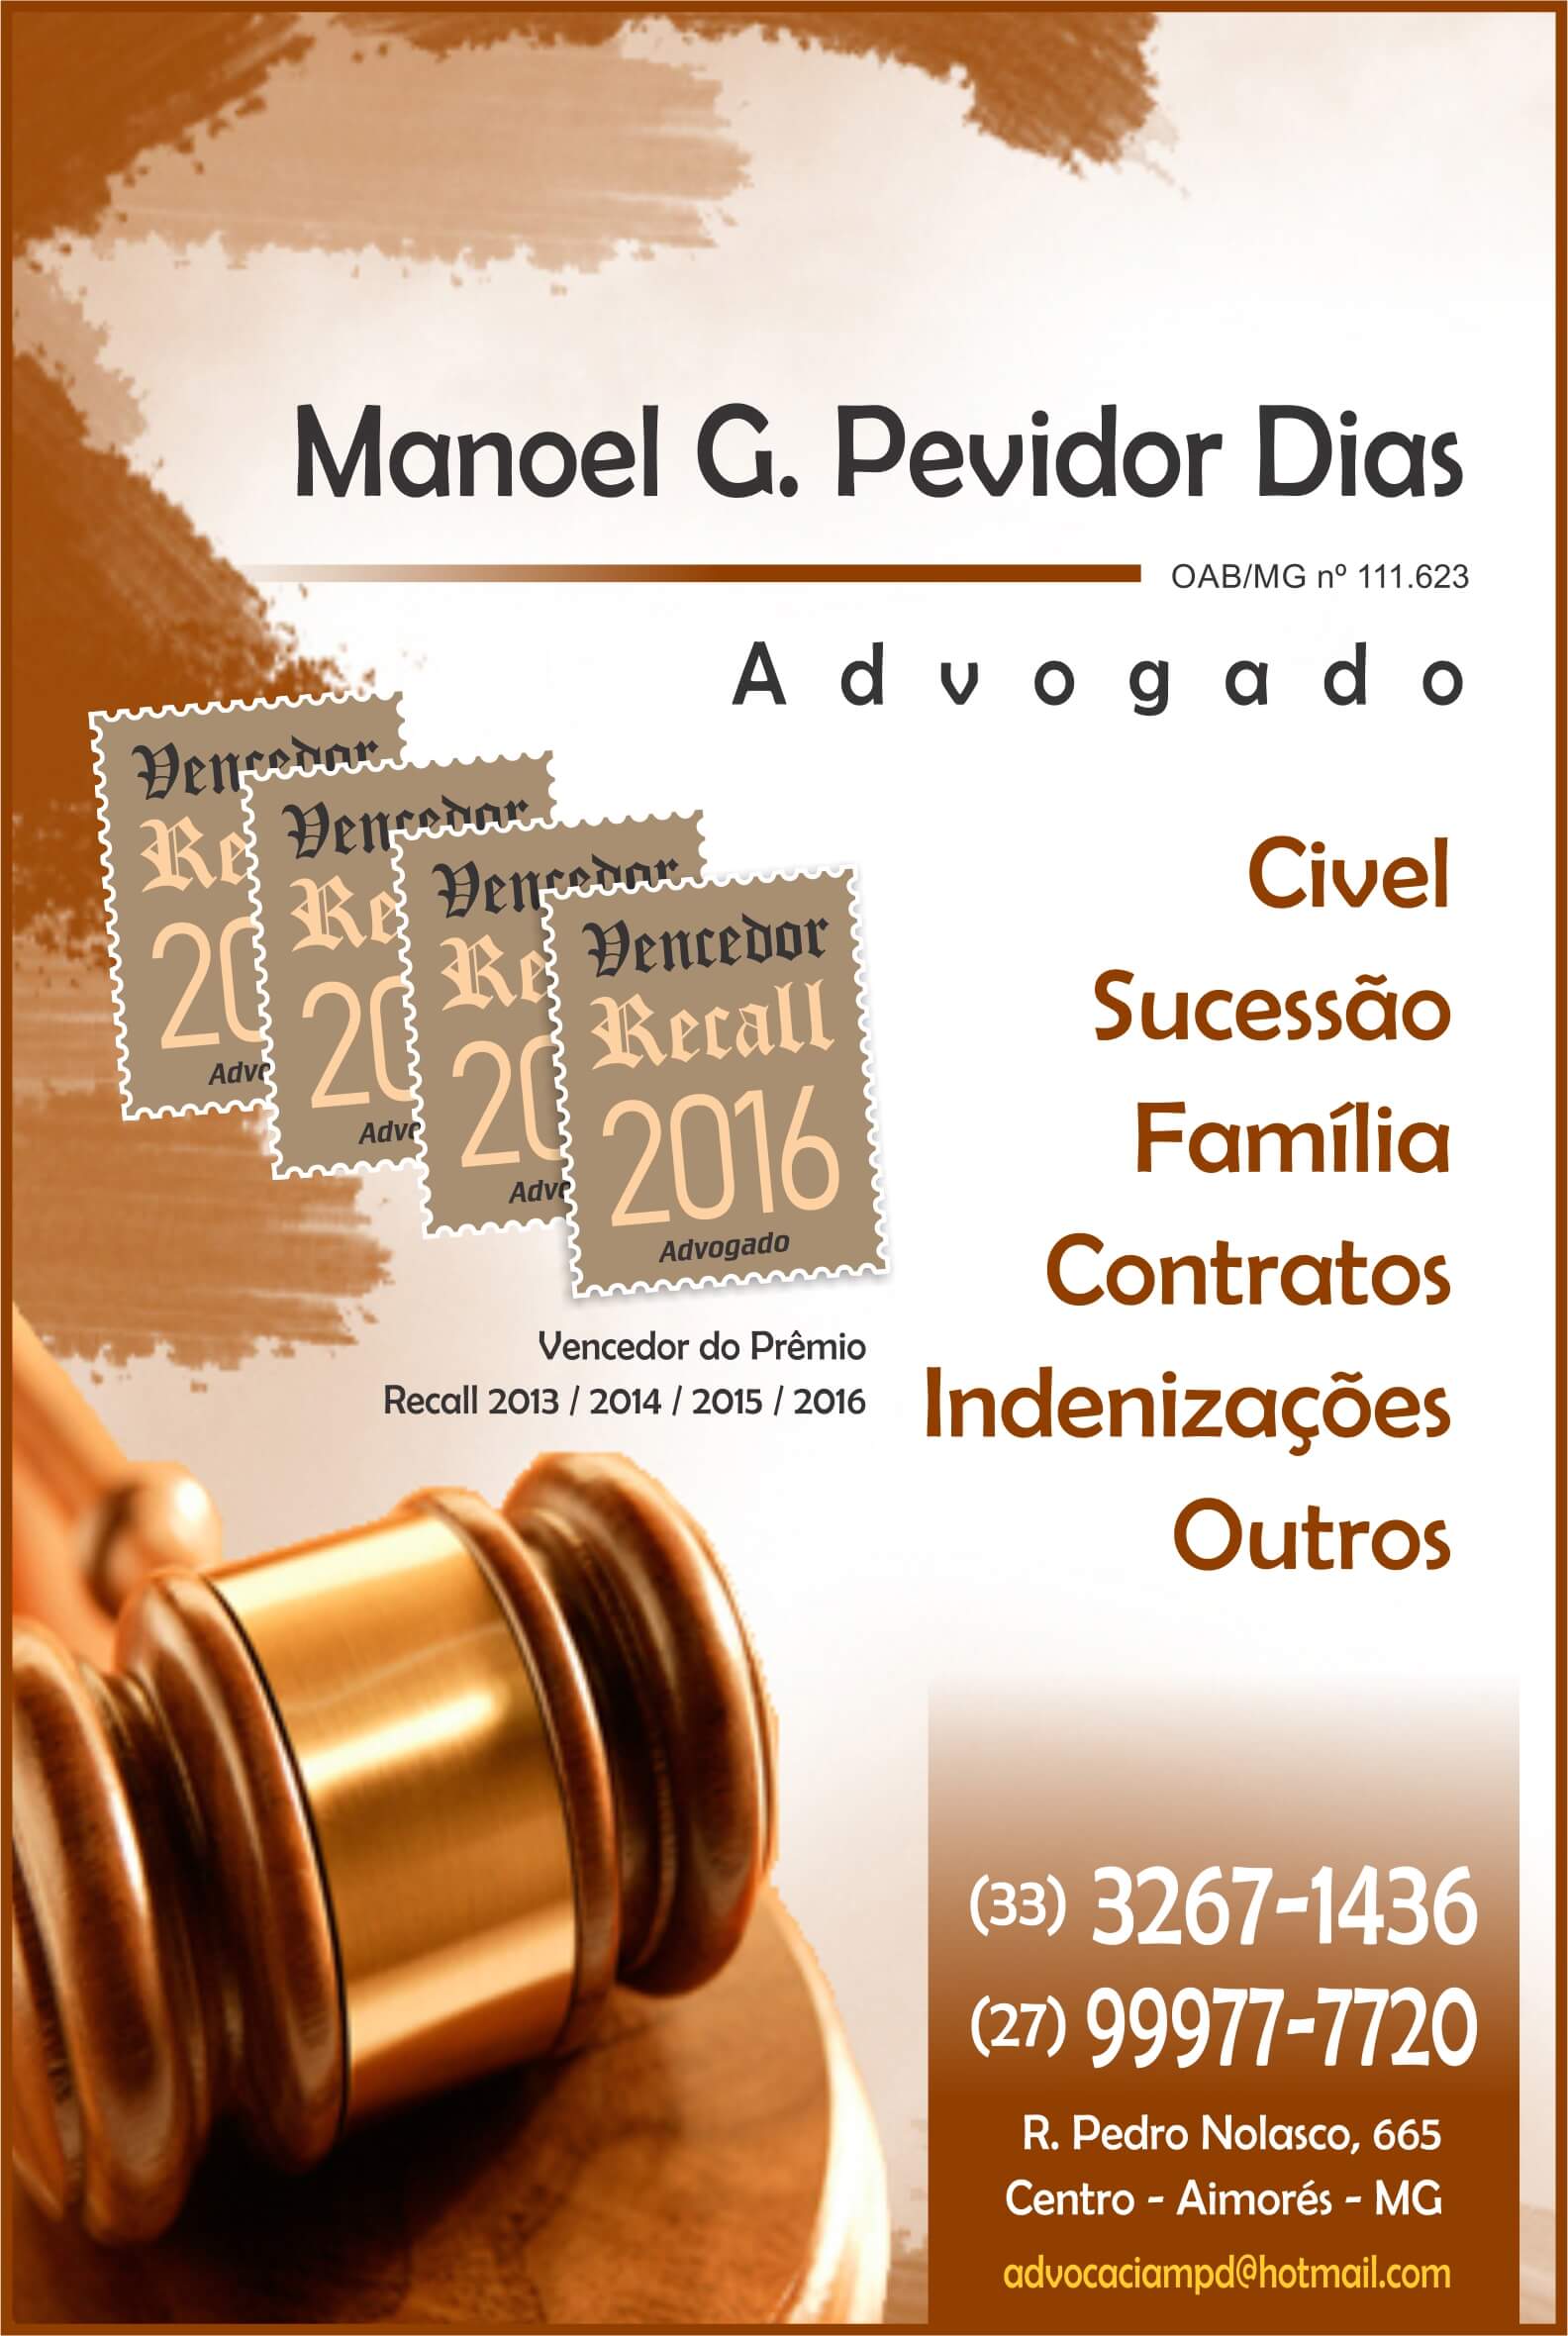 Advogado Dr. Manoel G. Pevidor Dias